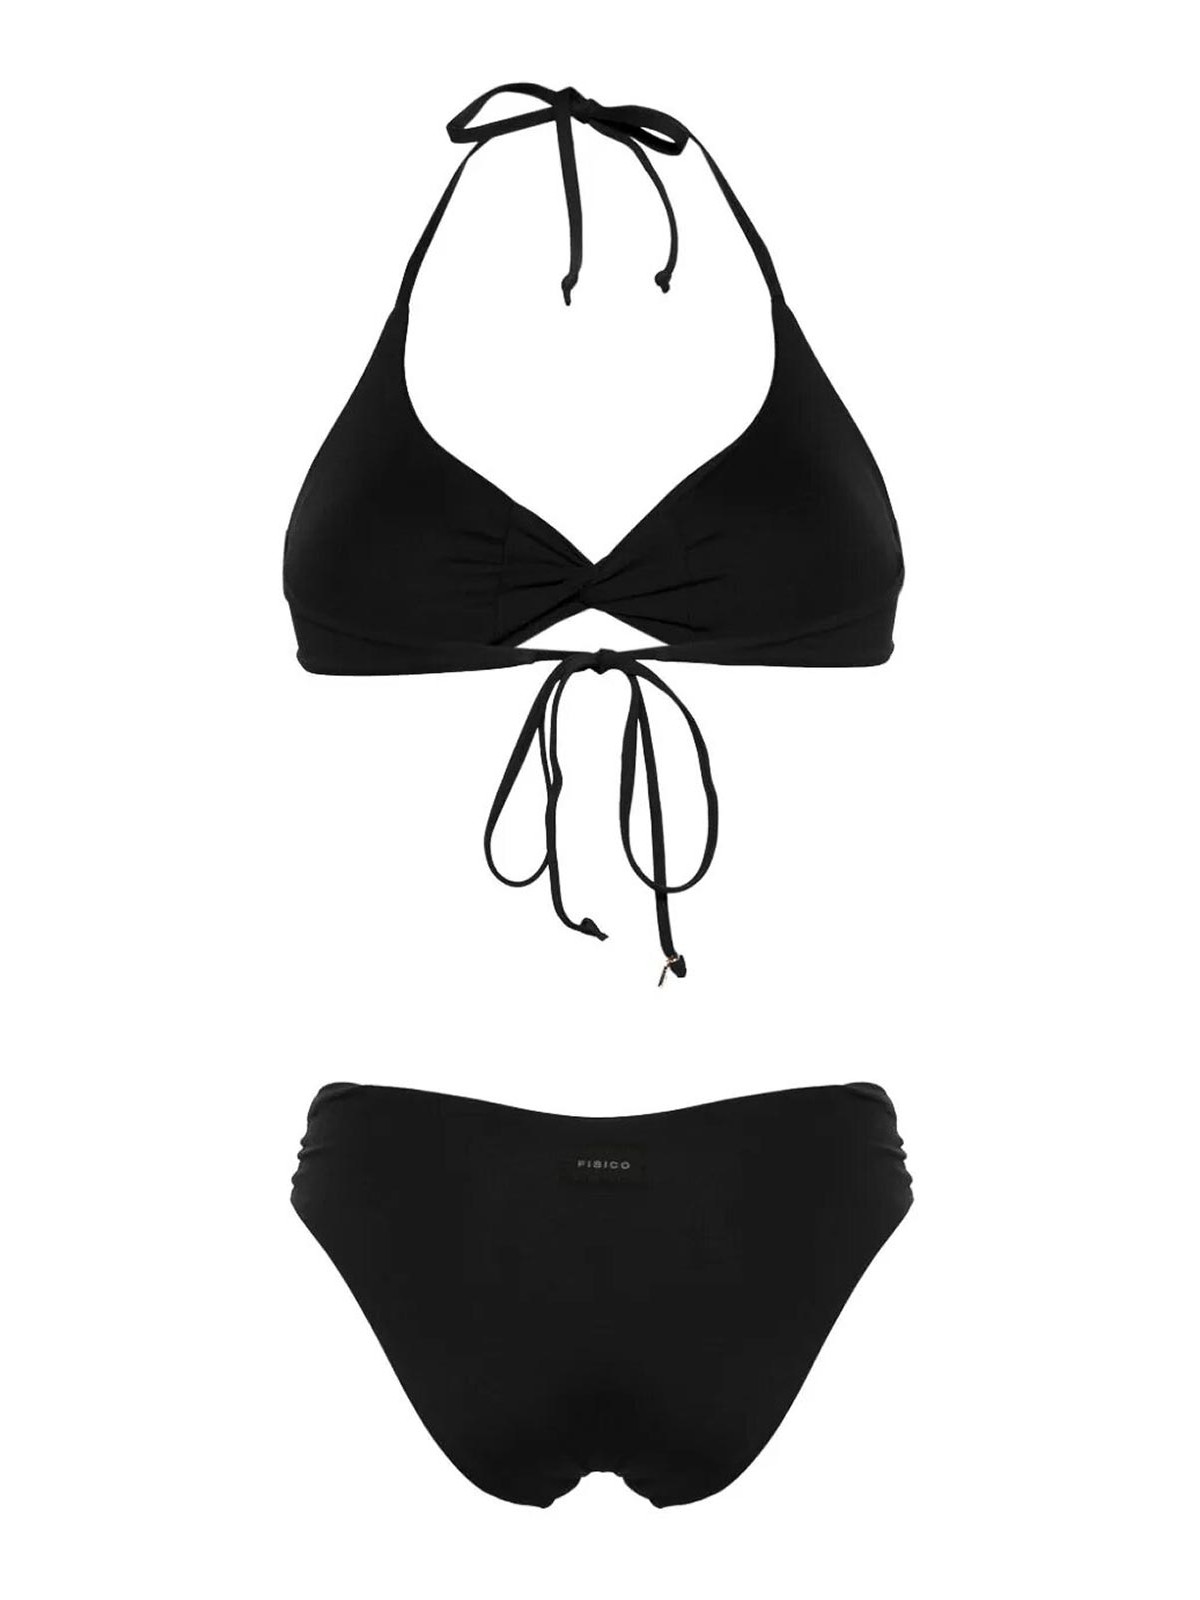 Shop Fisico Black Bikini Set